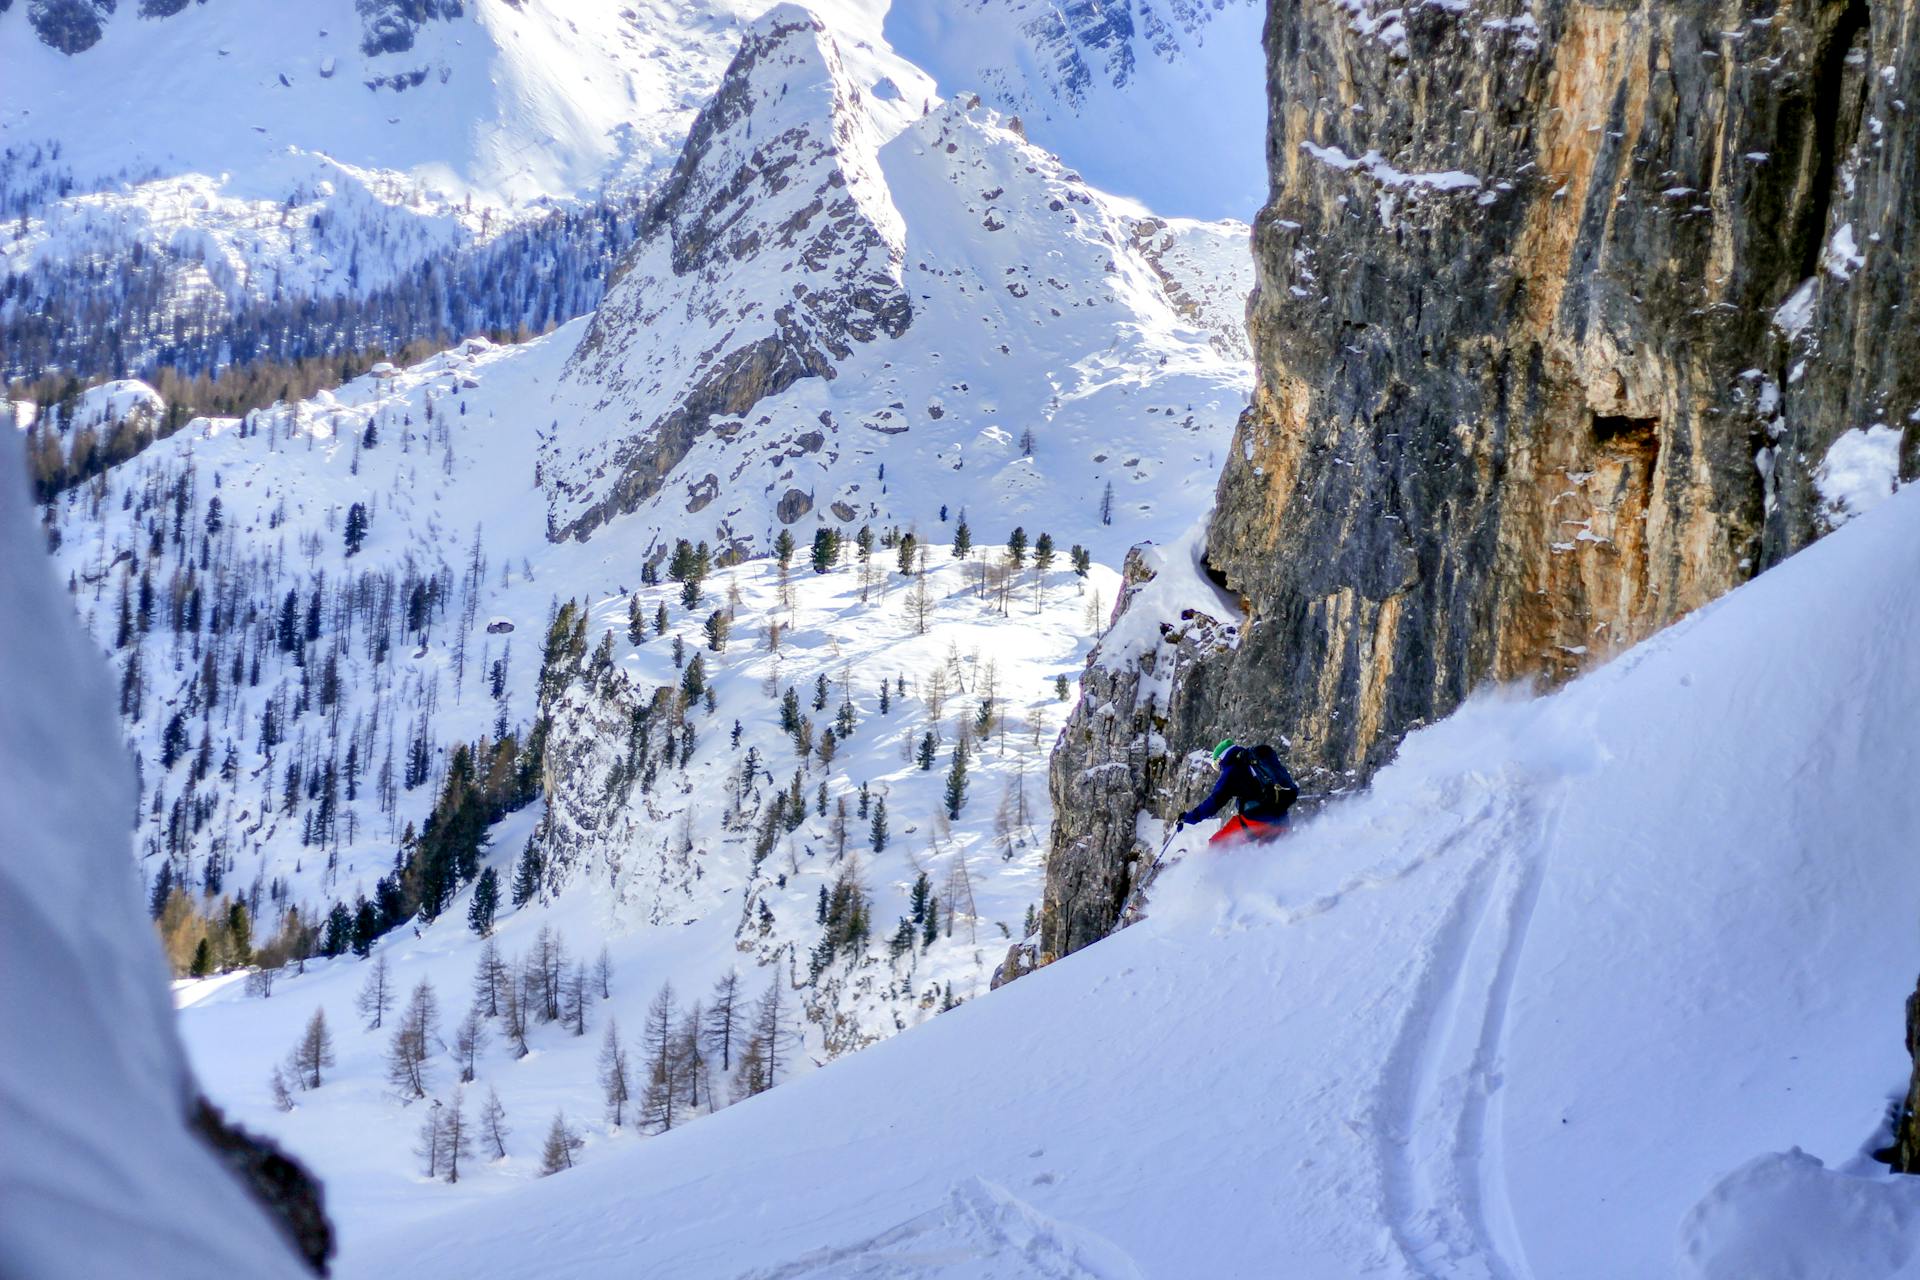 Skiier skiin down off piste slope between rocky mountain faces